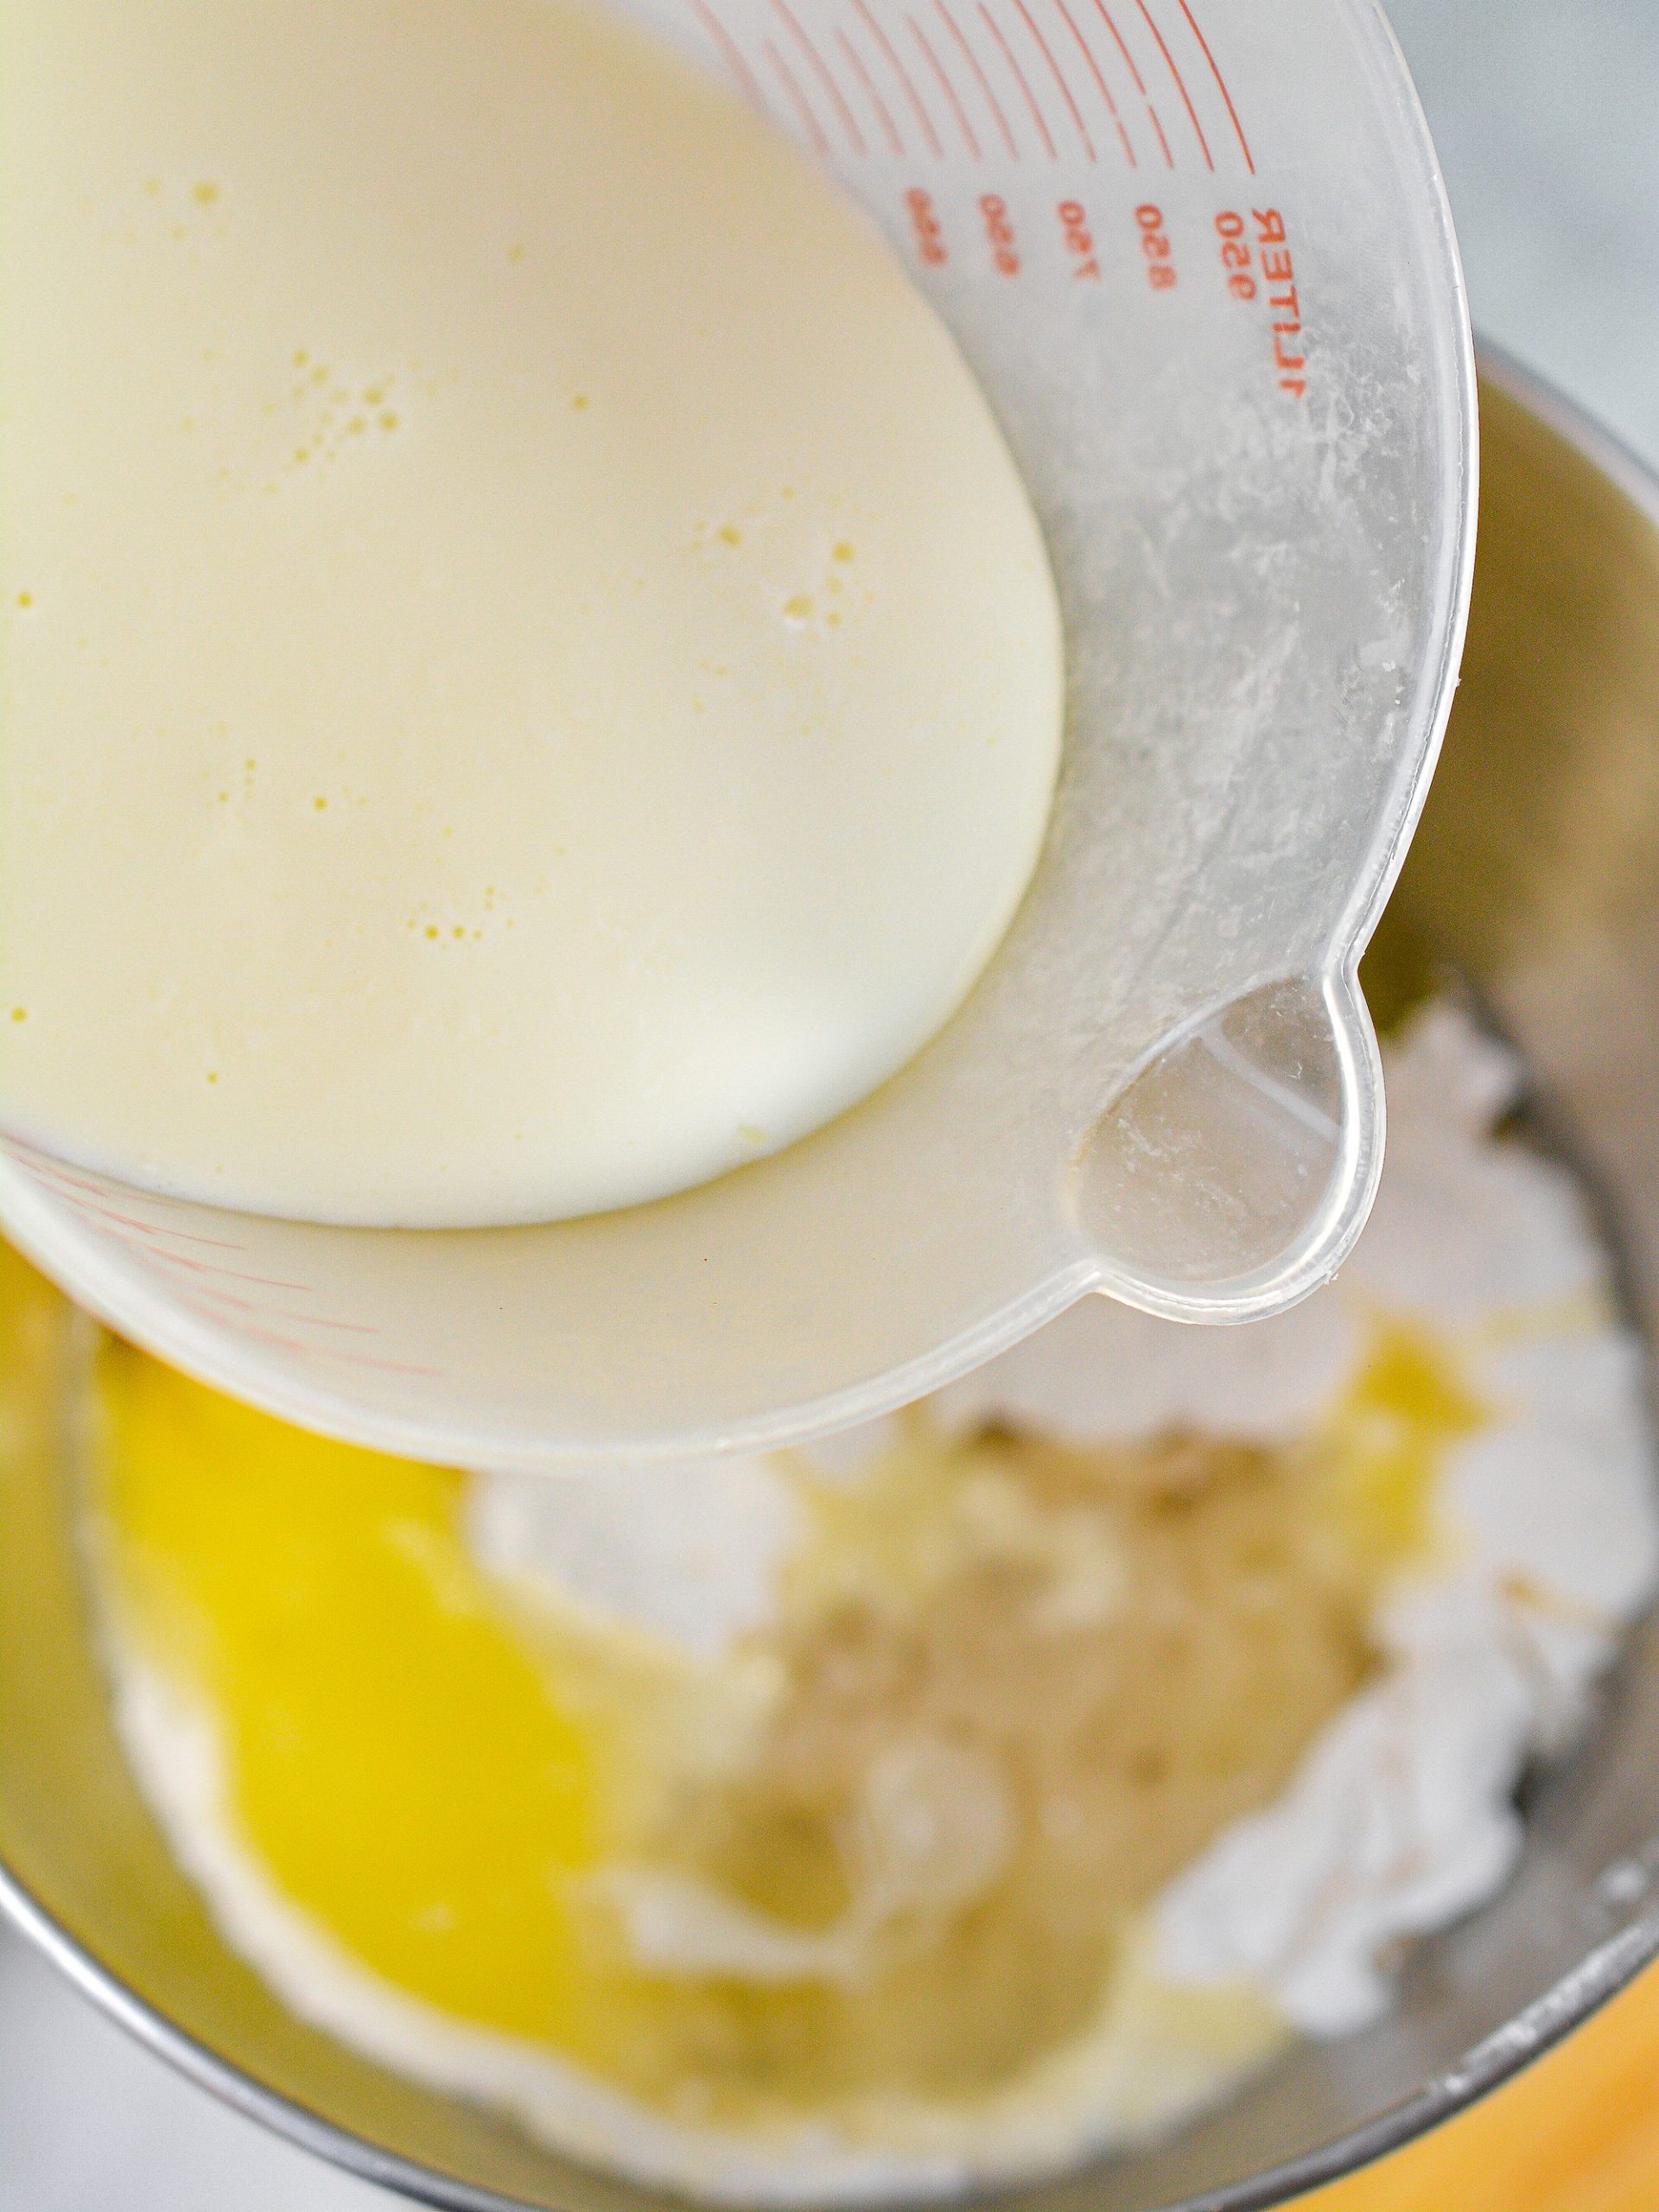 pour in the buttermilk.